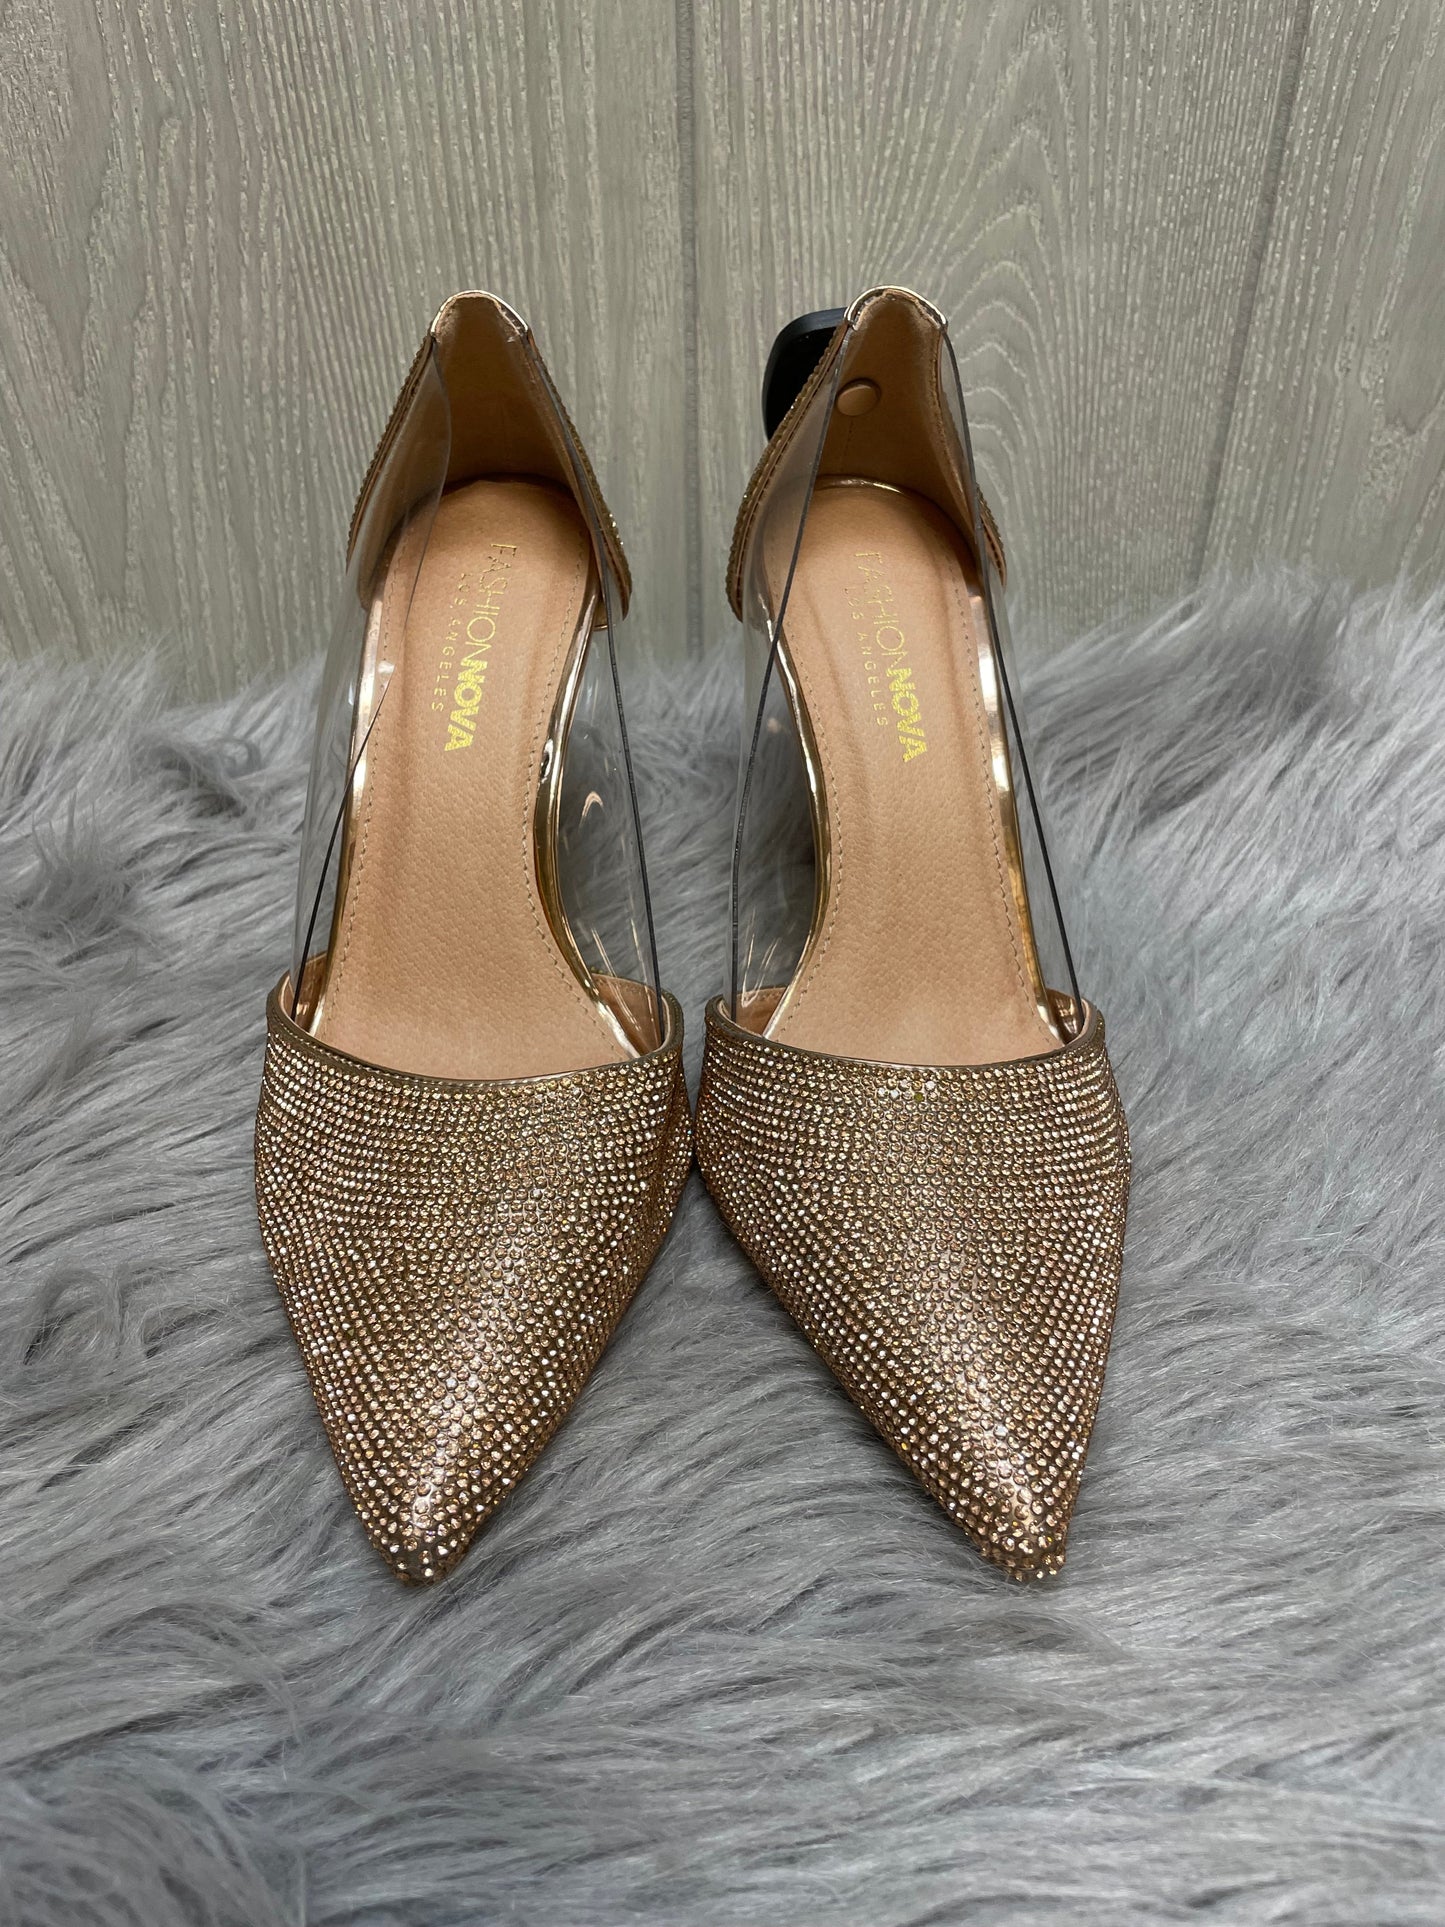 Gold Shoes Heels Stiletto Fashion Nova, Size 9